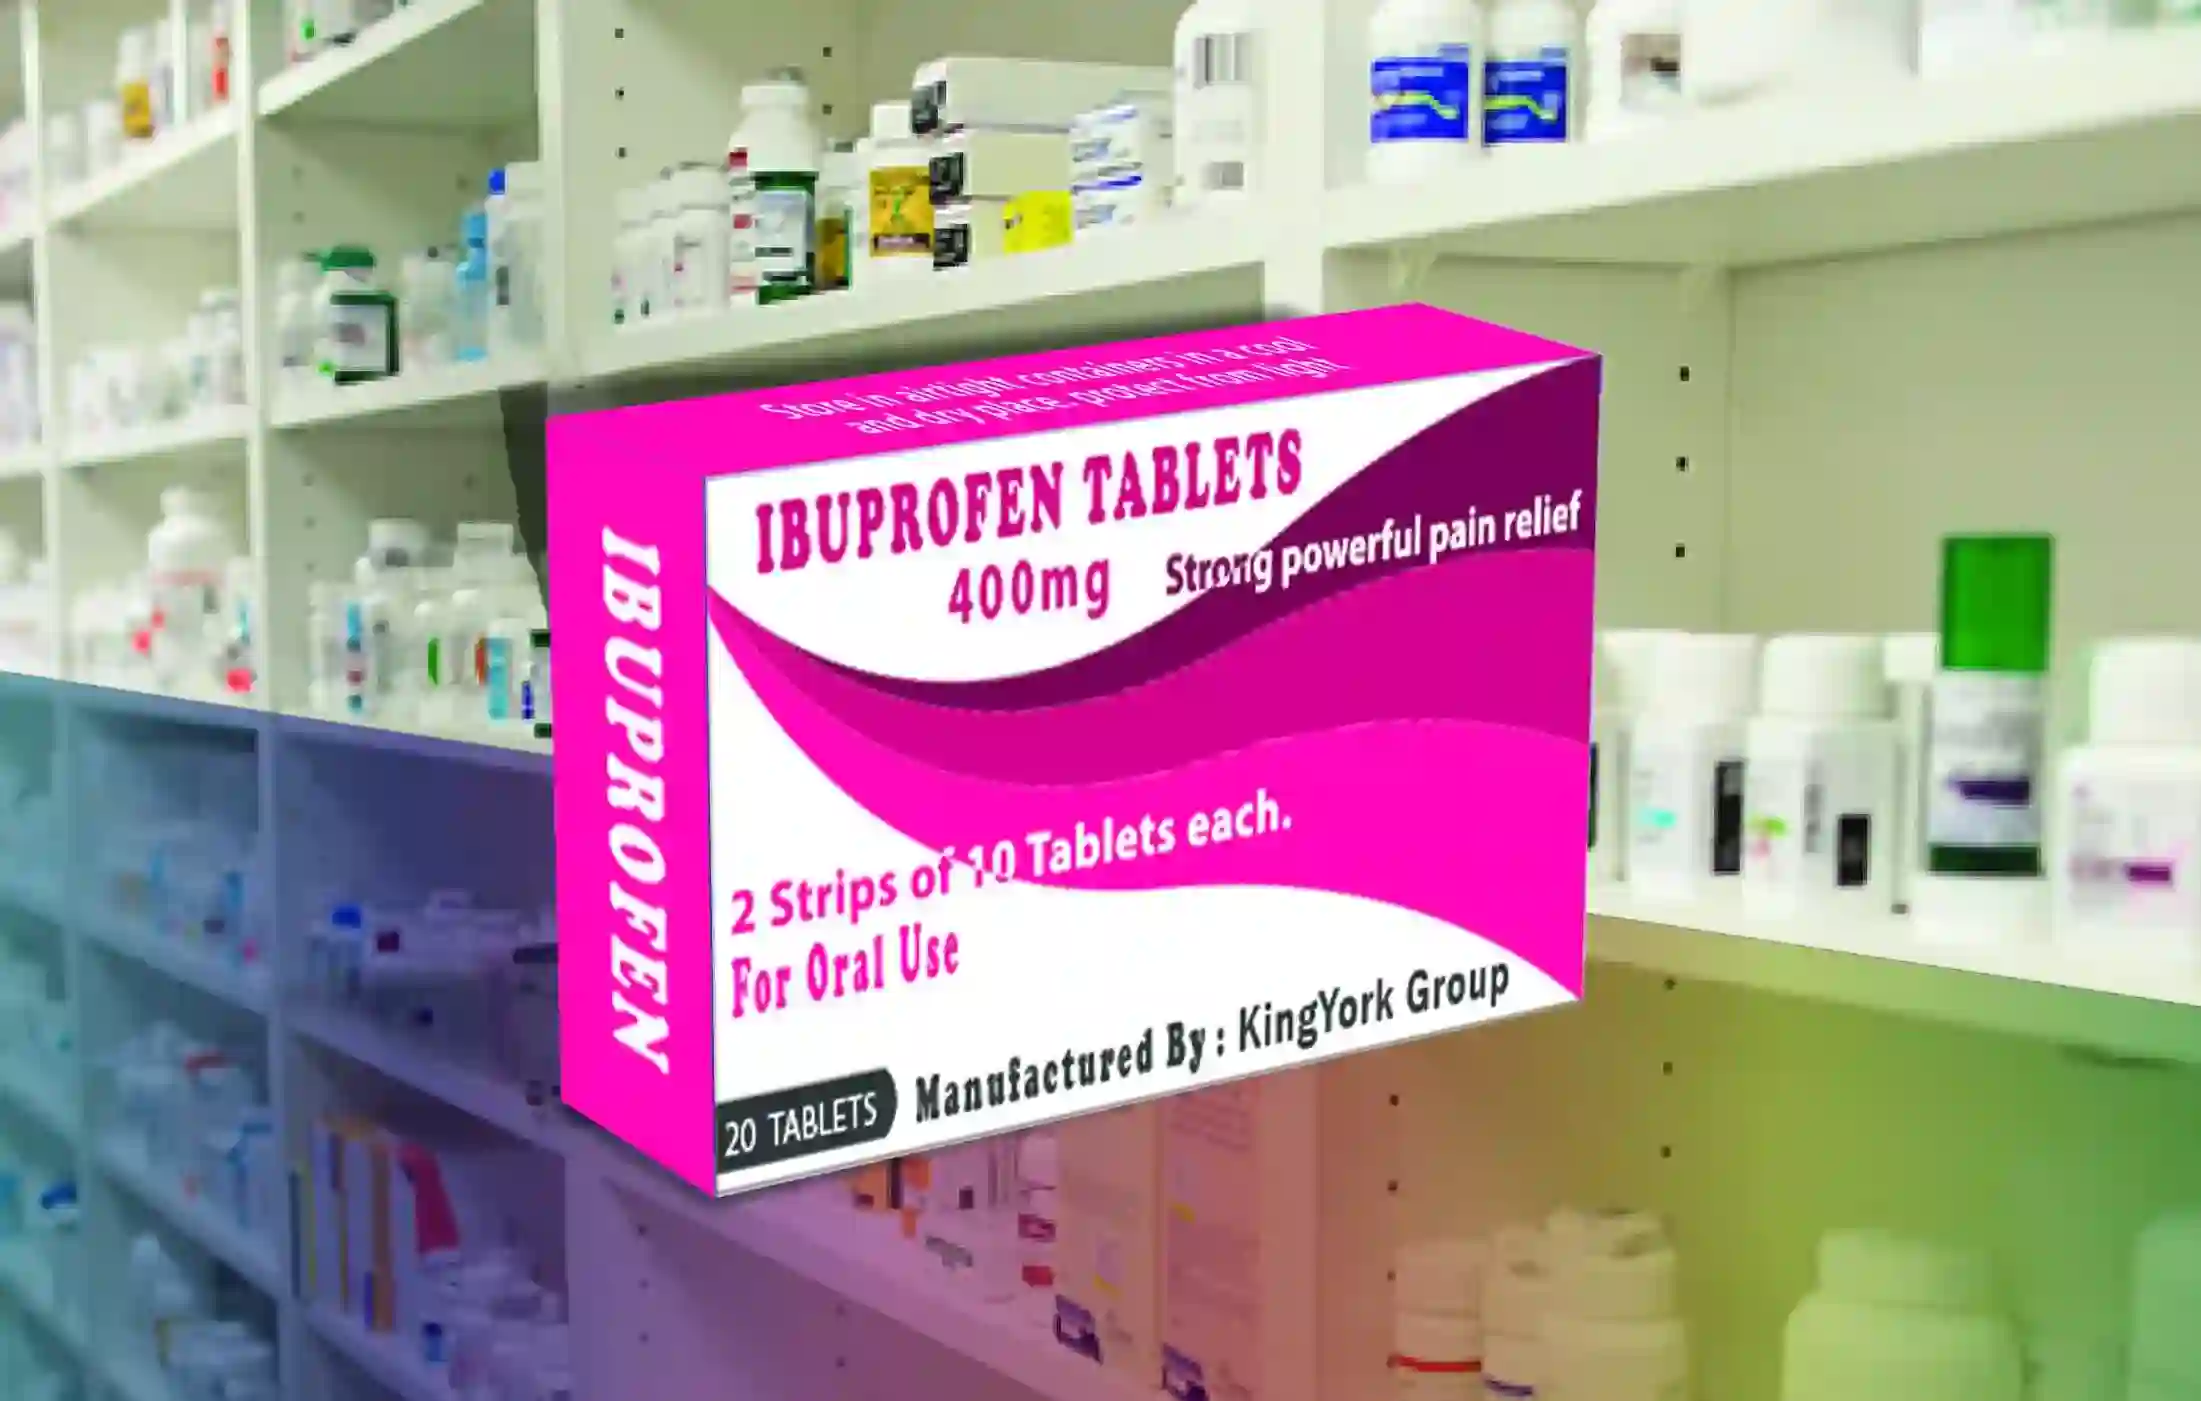 'ibuprofen tablets', 'ibuprofen 400mg tablets', 'antiinflammatory tablets', 'analgesic'